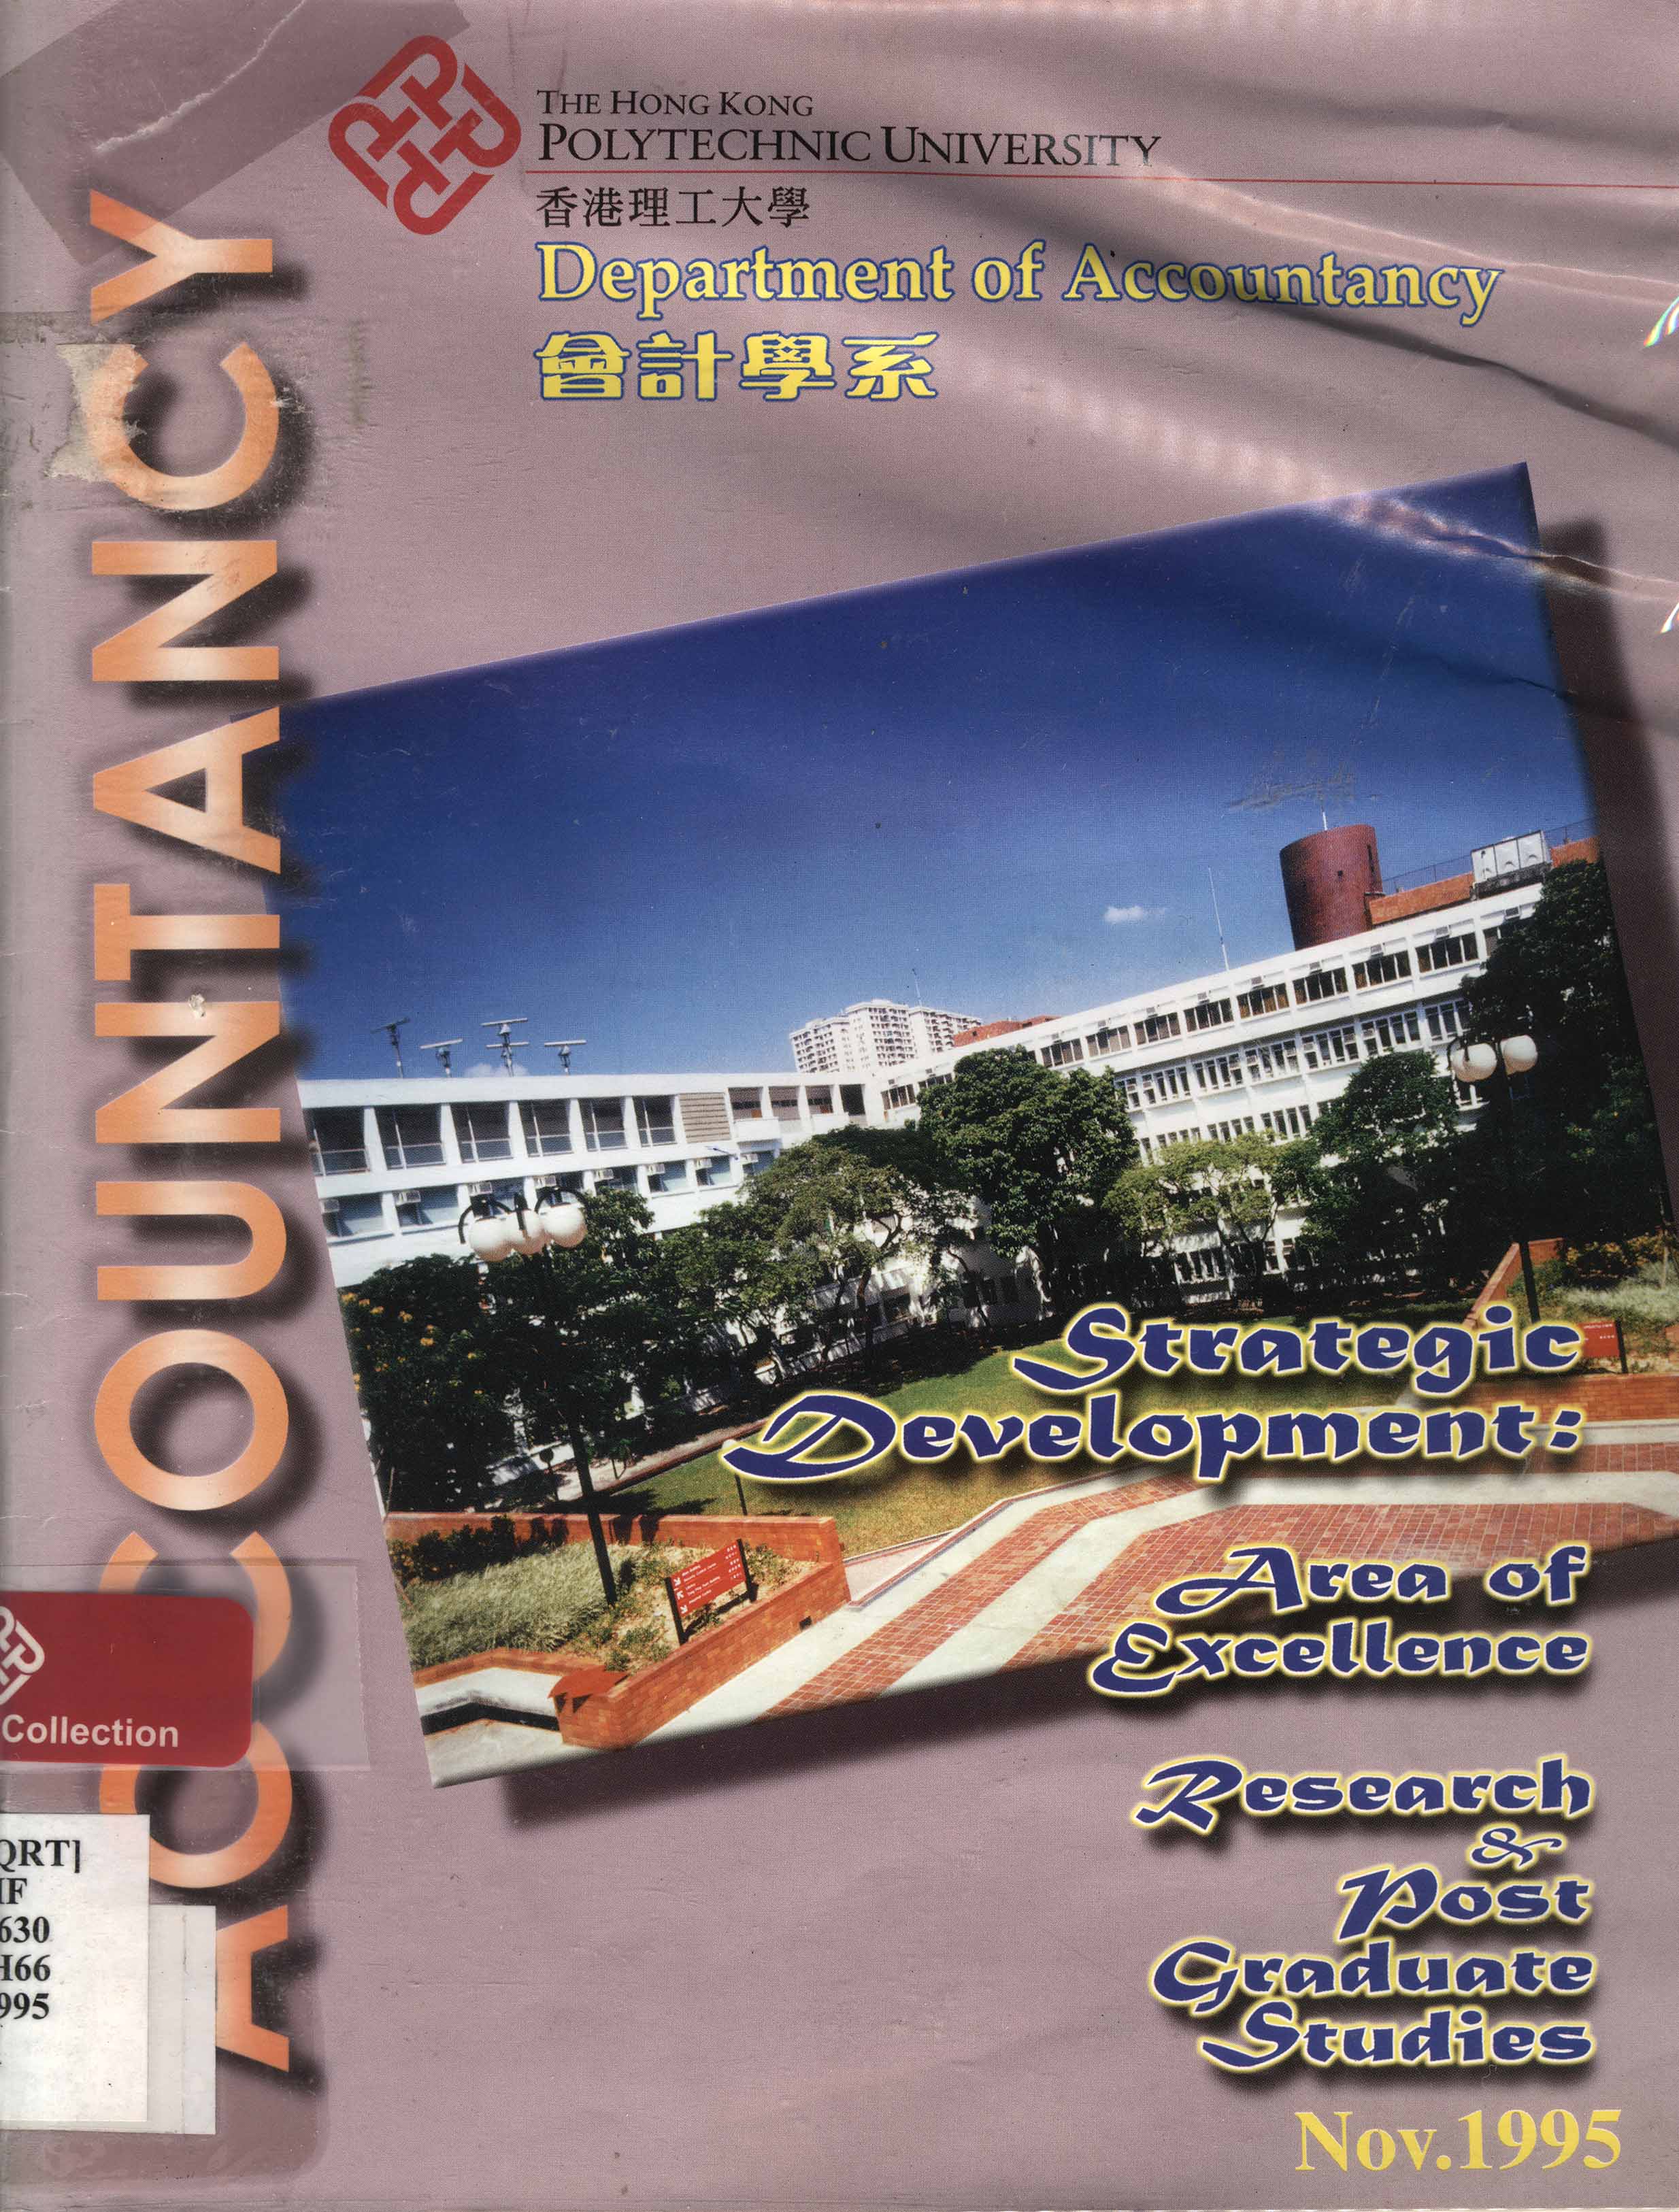 Hong Kong Polytechnic University. Department of Accountancy. Departmental update 1995